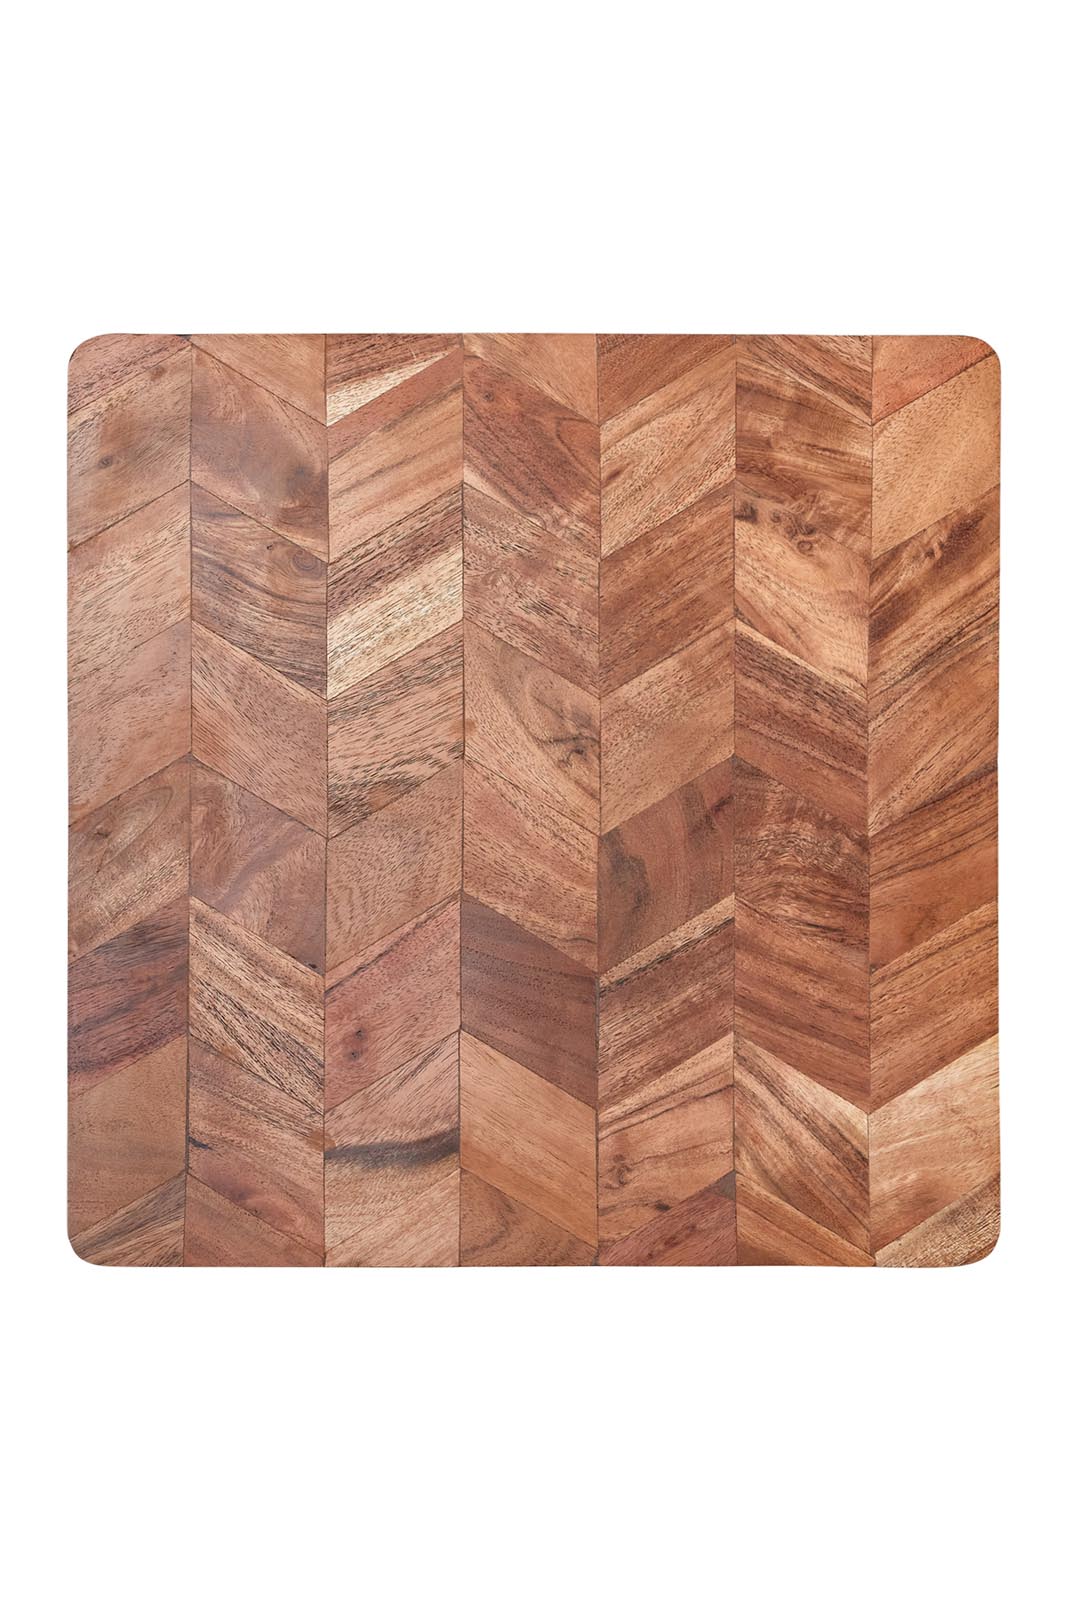 Studio Checker Board Set - Wood - eb&ive Table Top